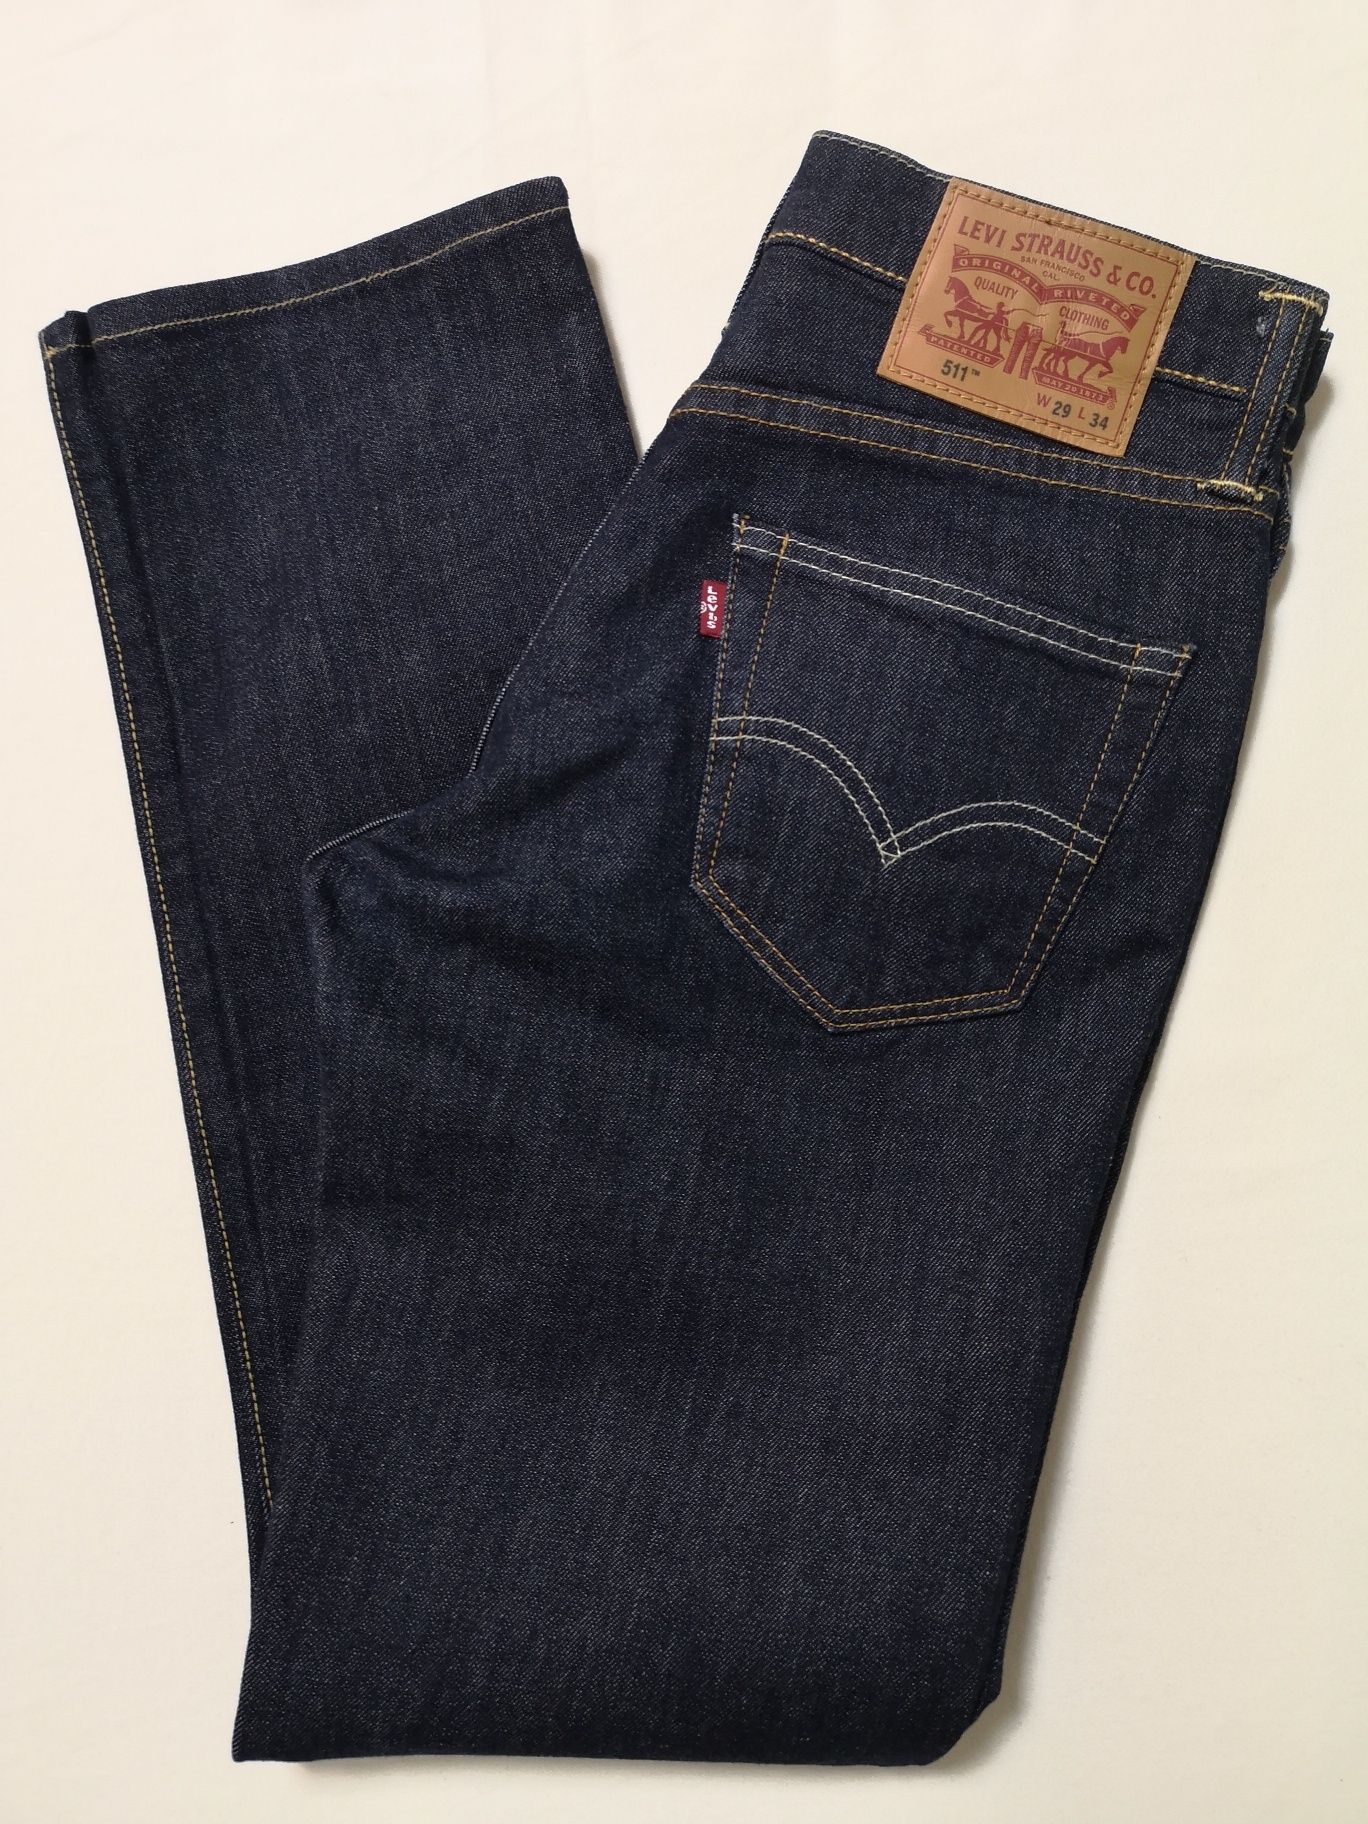 Levi Strauss & CO jeans W29 /L 34